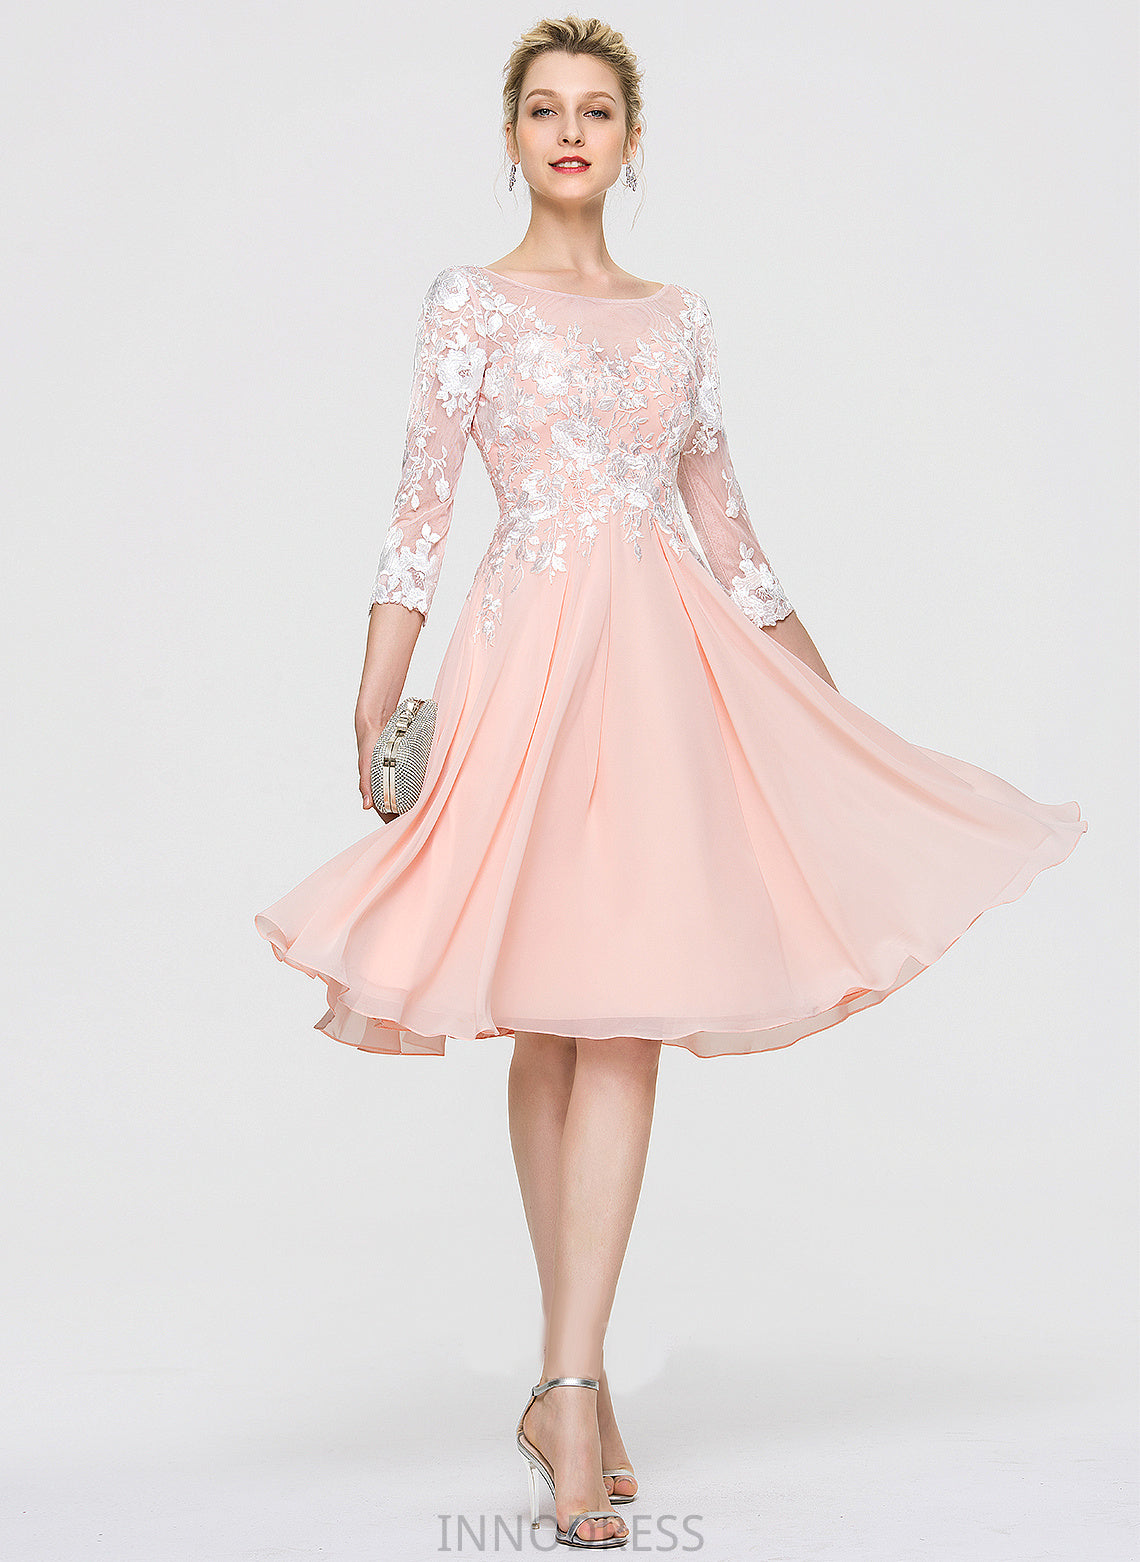 Yasmine Zoey Bridesmaid Homecoming Dresses Dresses